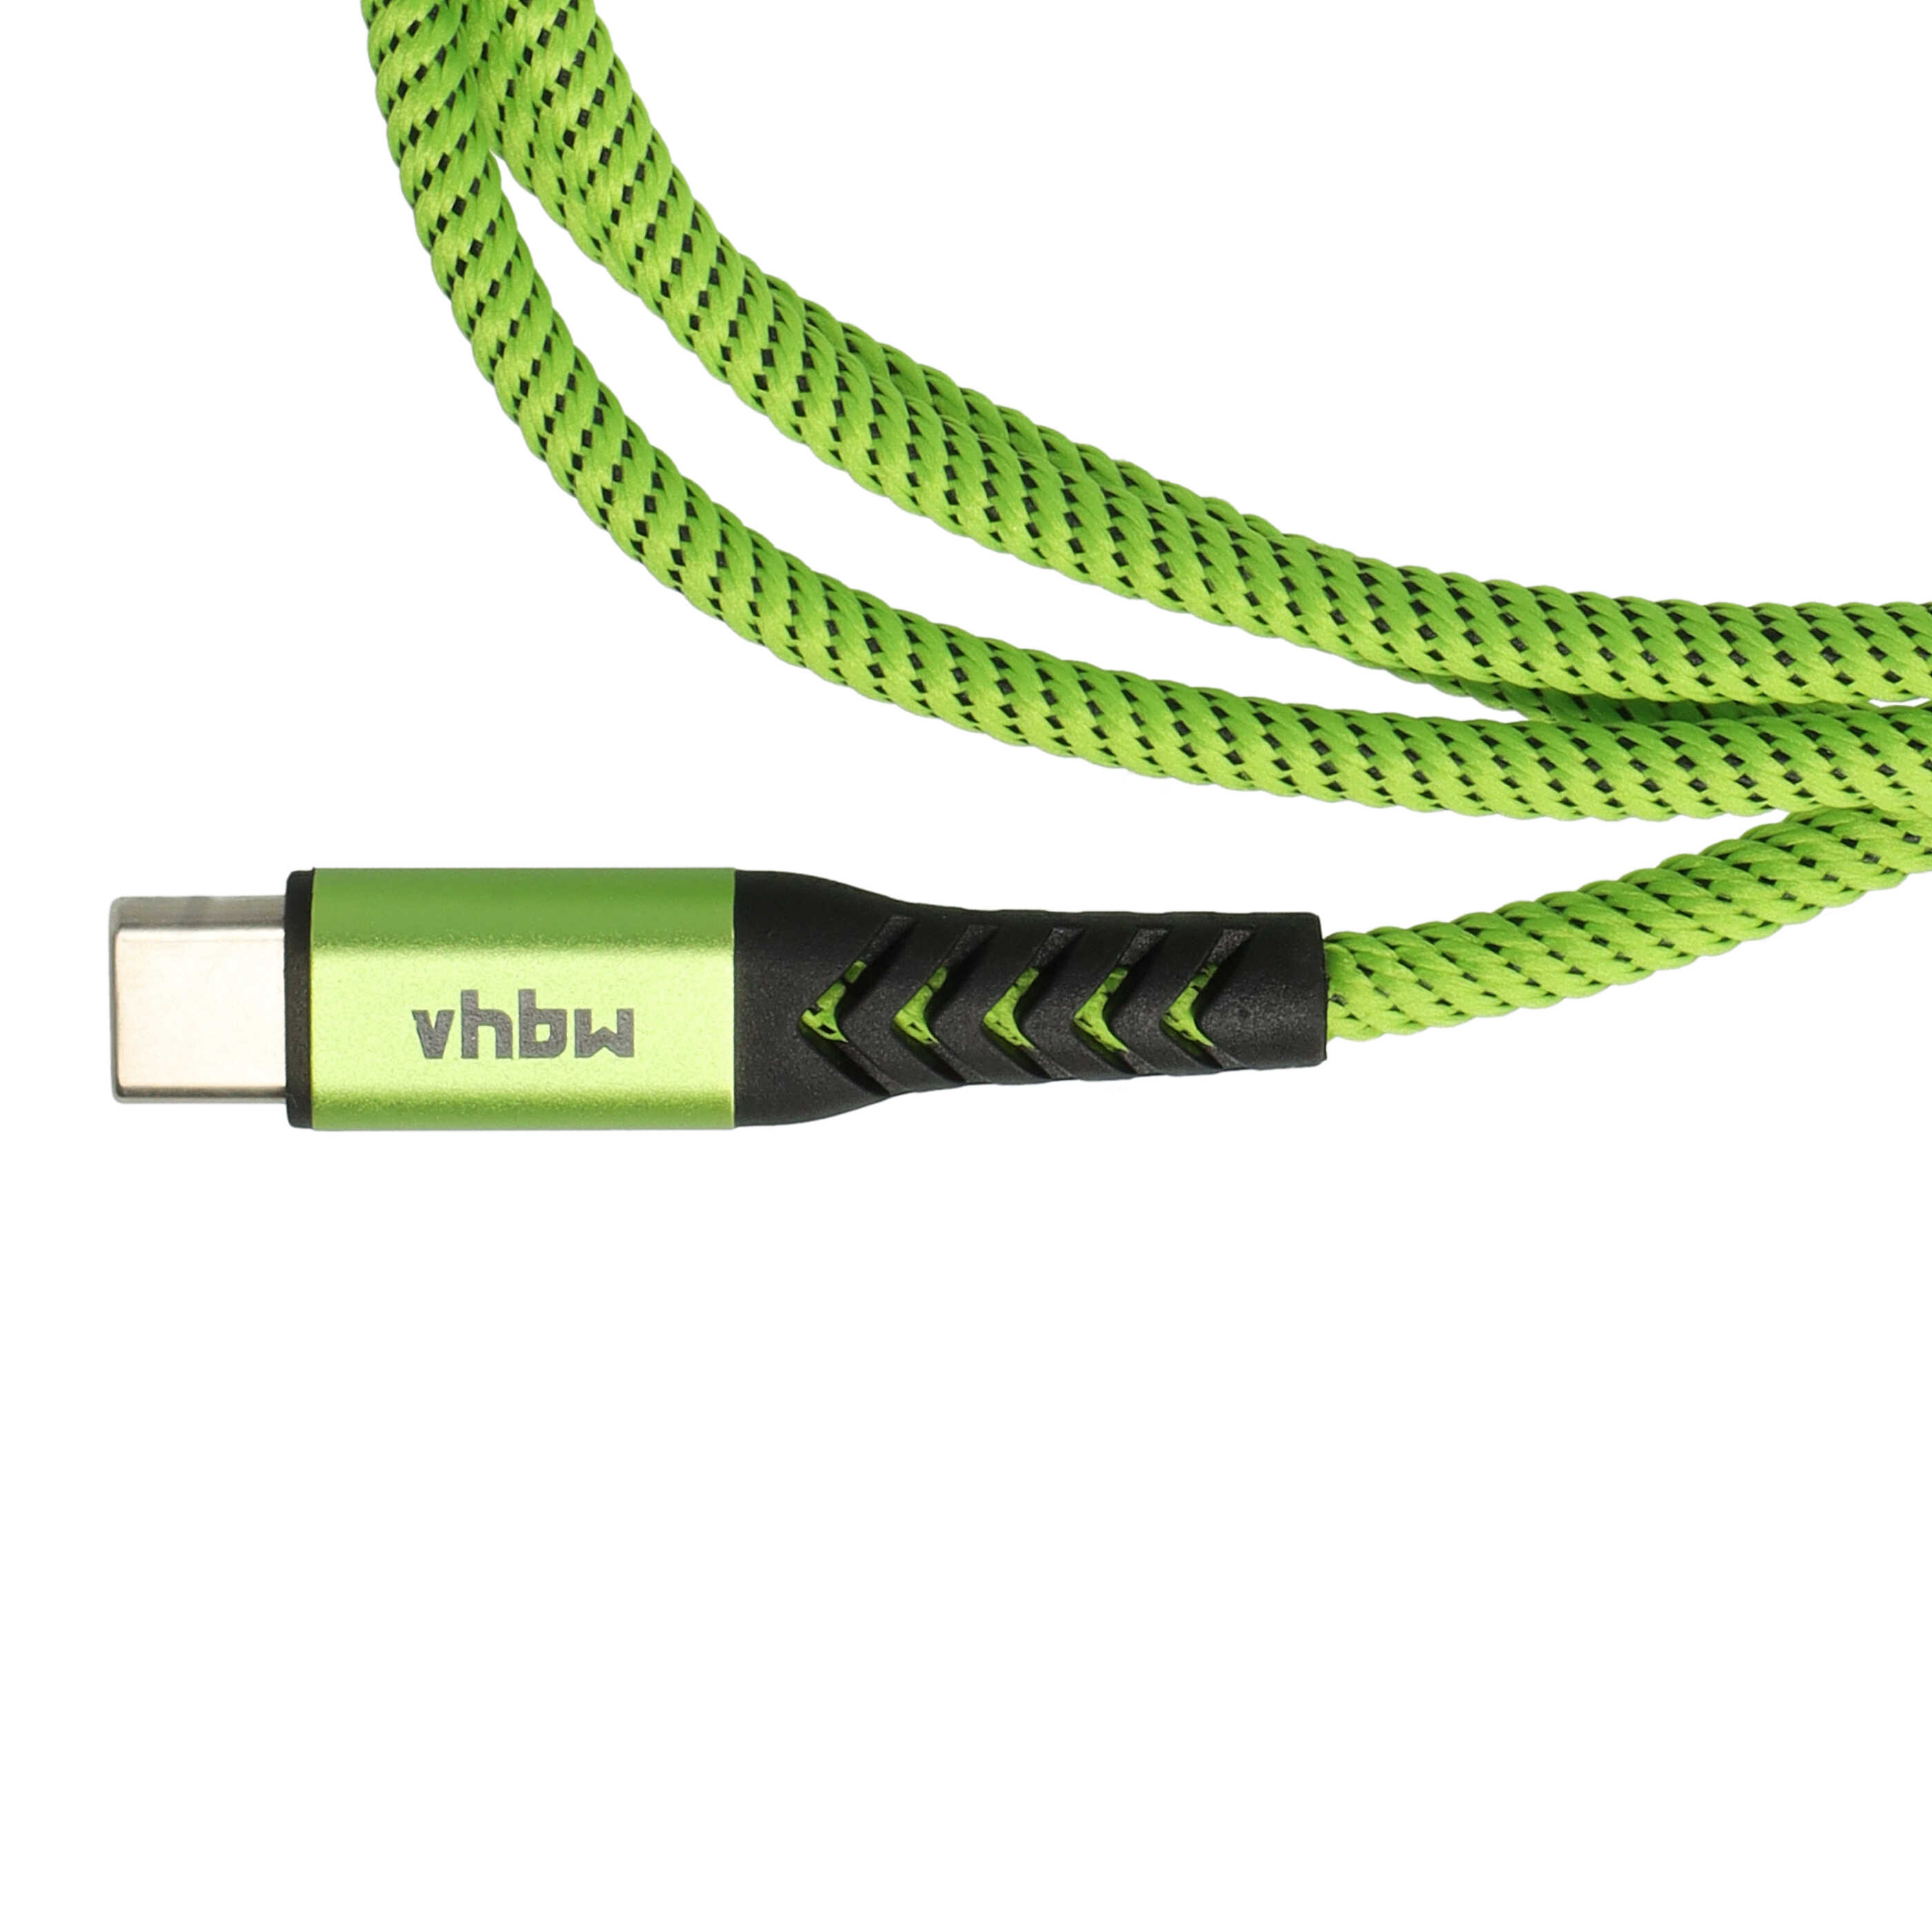 Câble Lightning vers USB C, Thunderbolt 3 pour iOS - noir / vert, 100cm